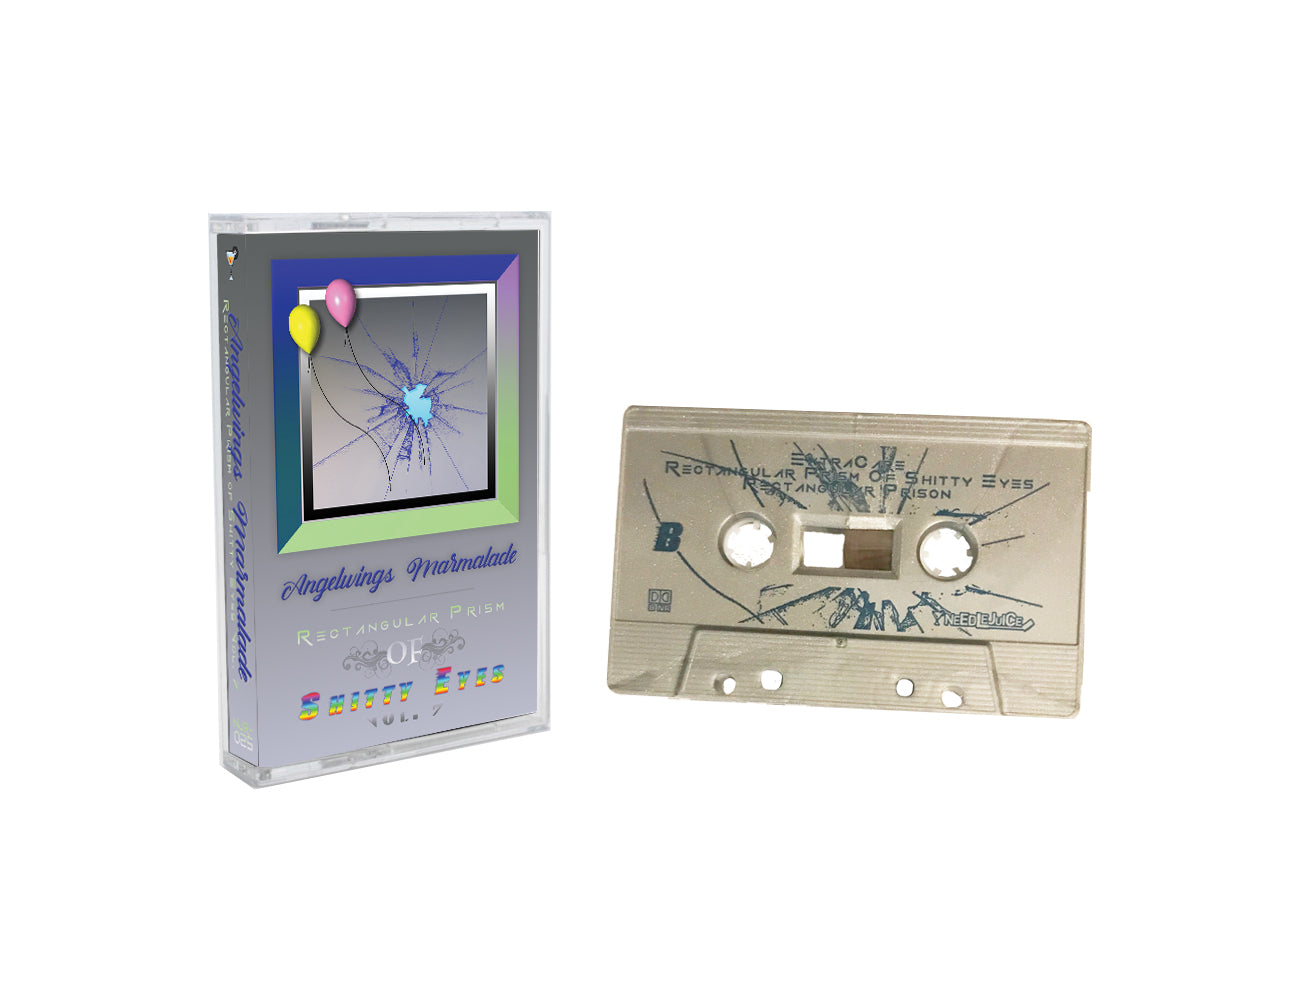 Rectangular Prism of Shitty Eyes Vol. 7 - Cassette